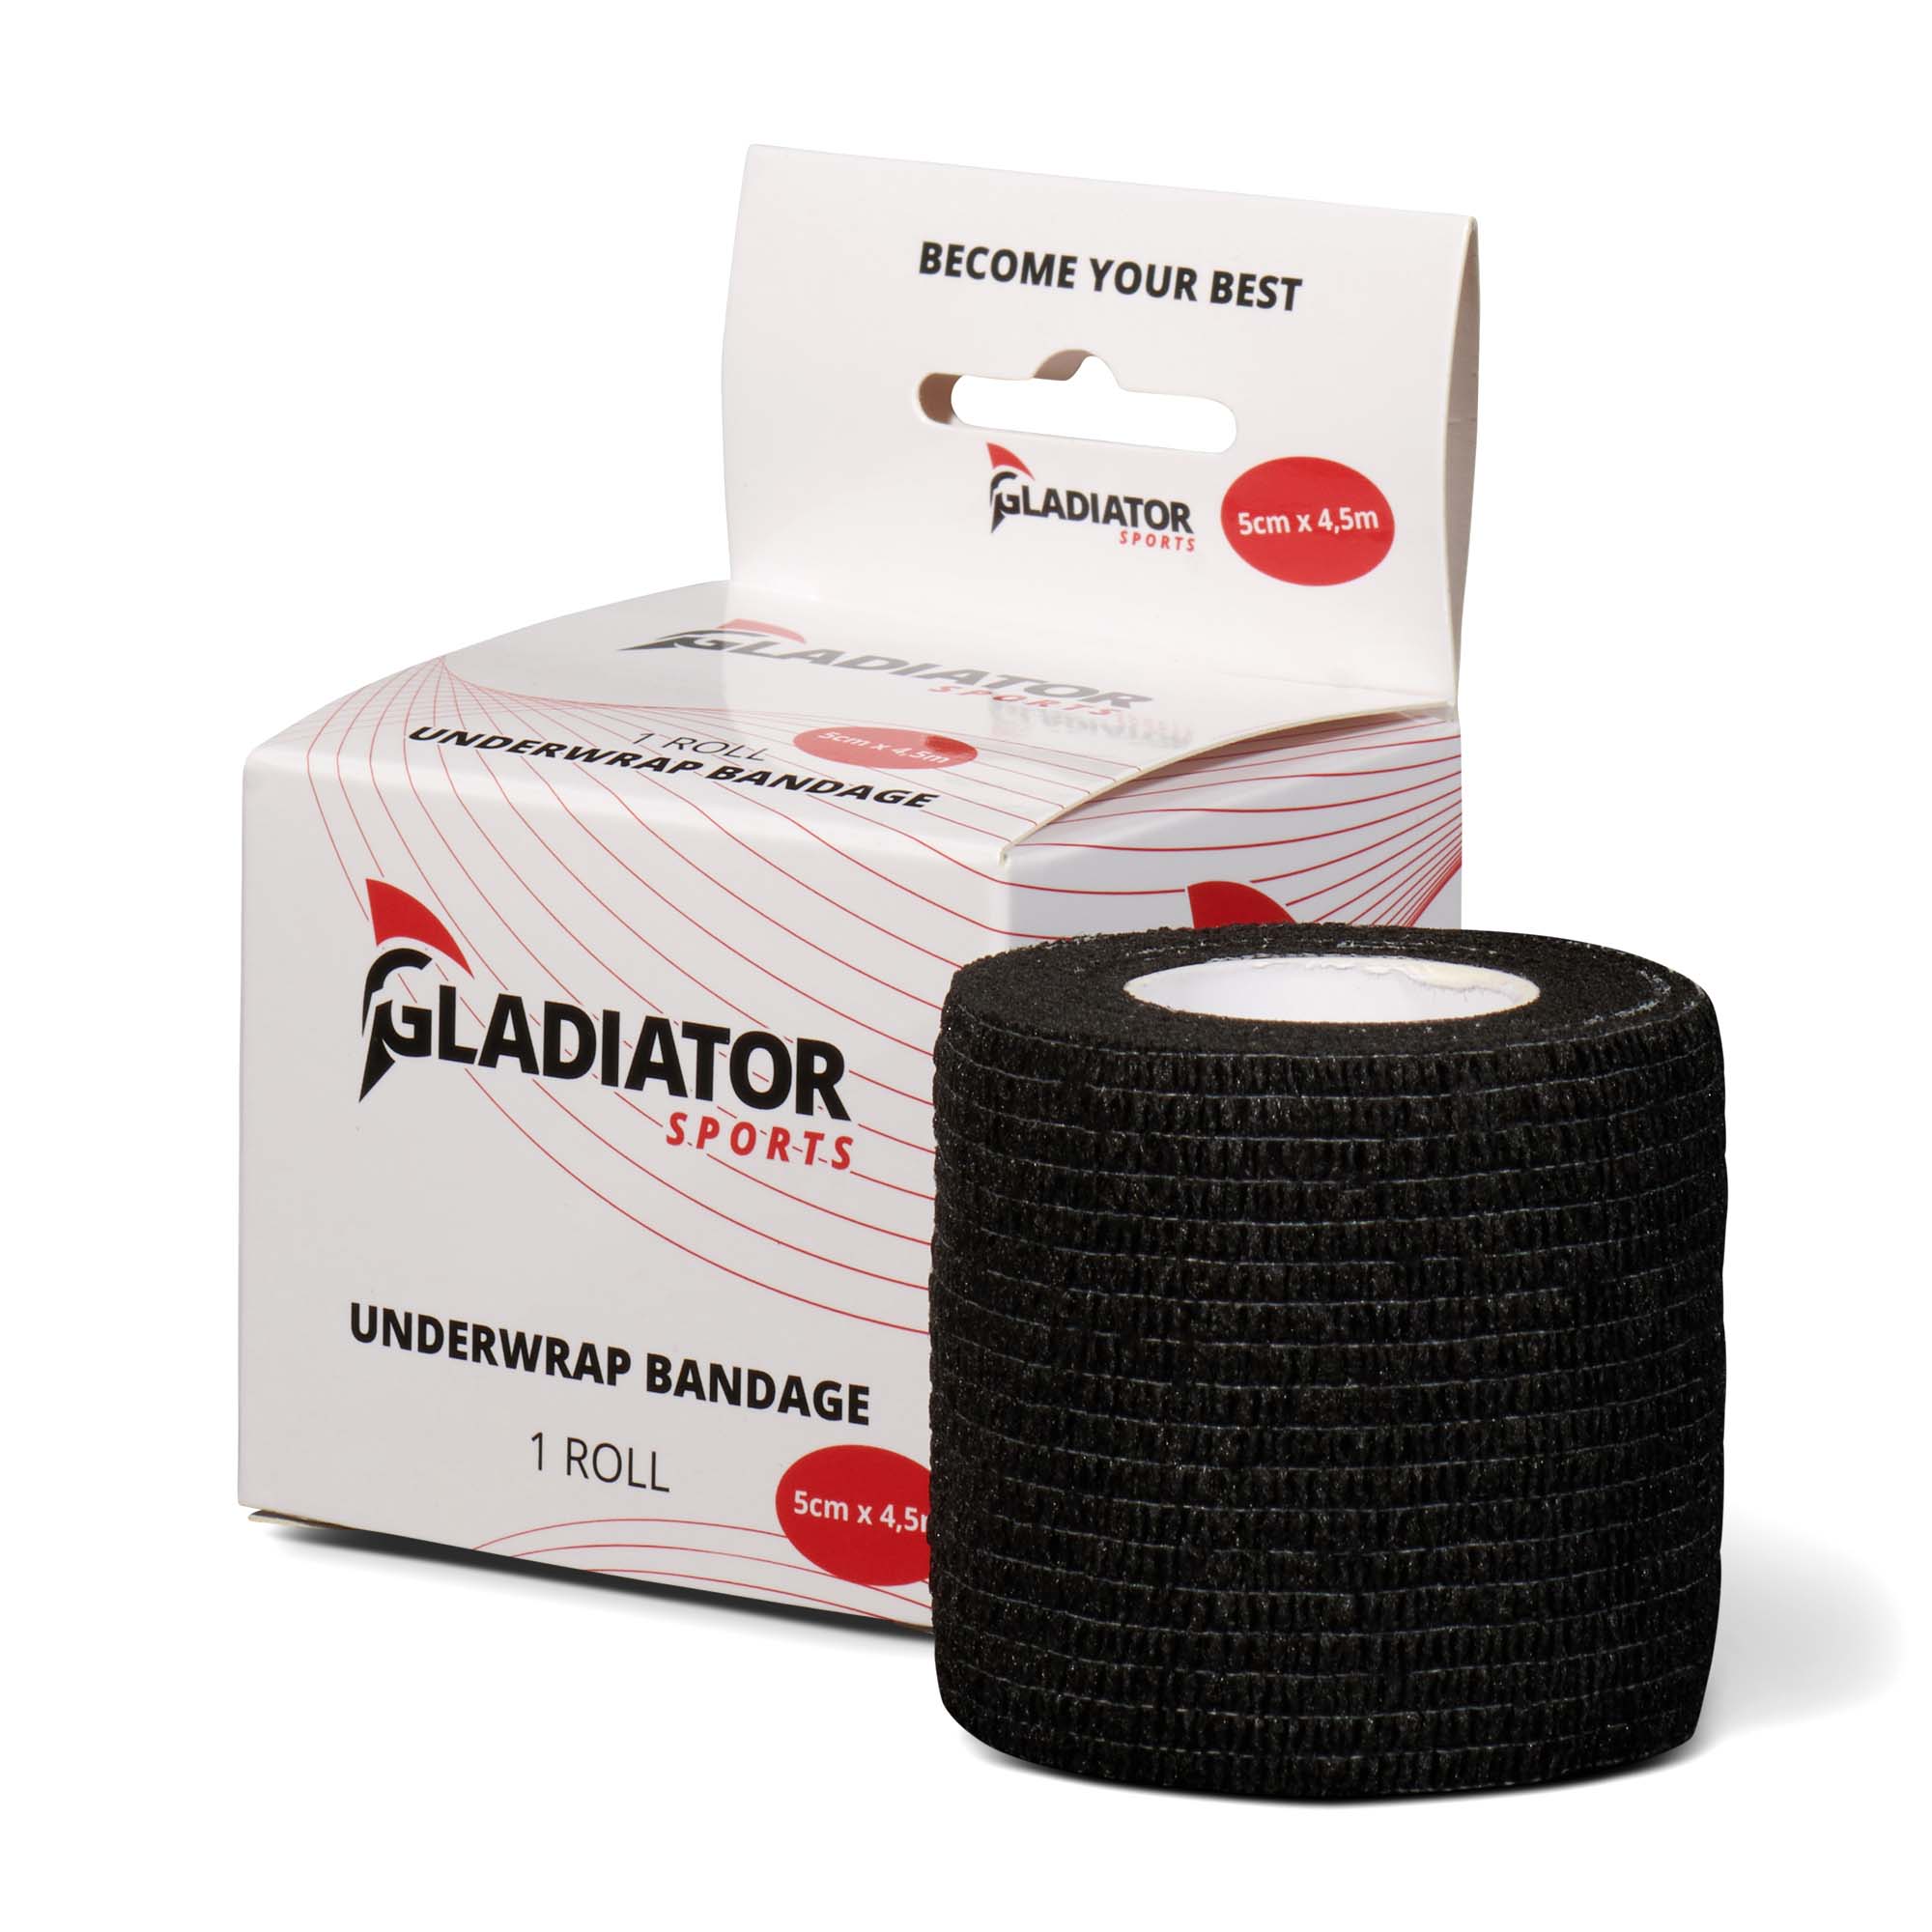 gladiator sports underwrap bandage per roll black with box